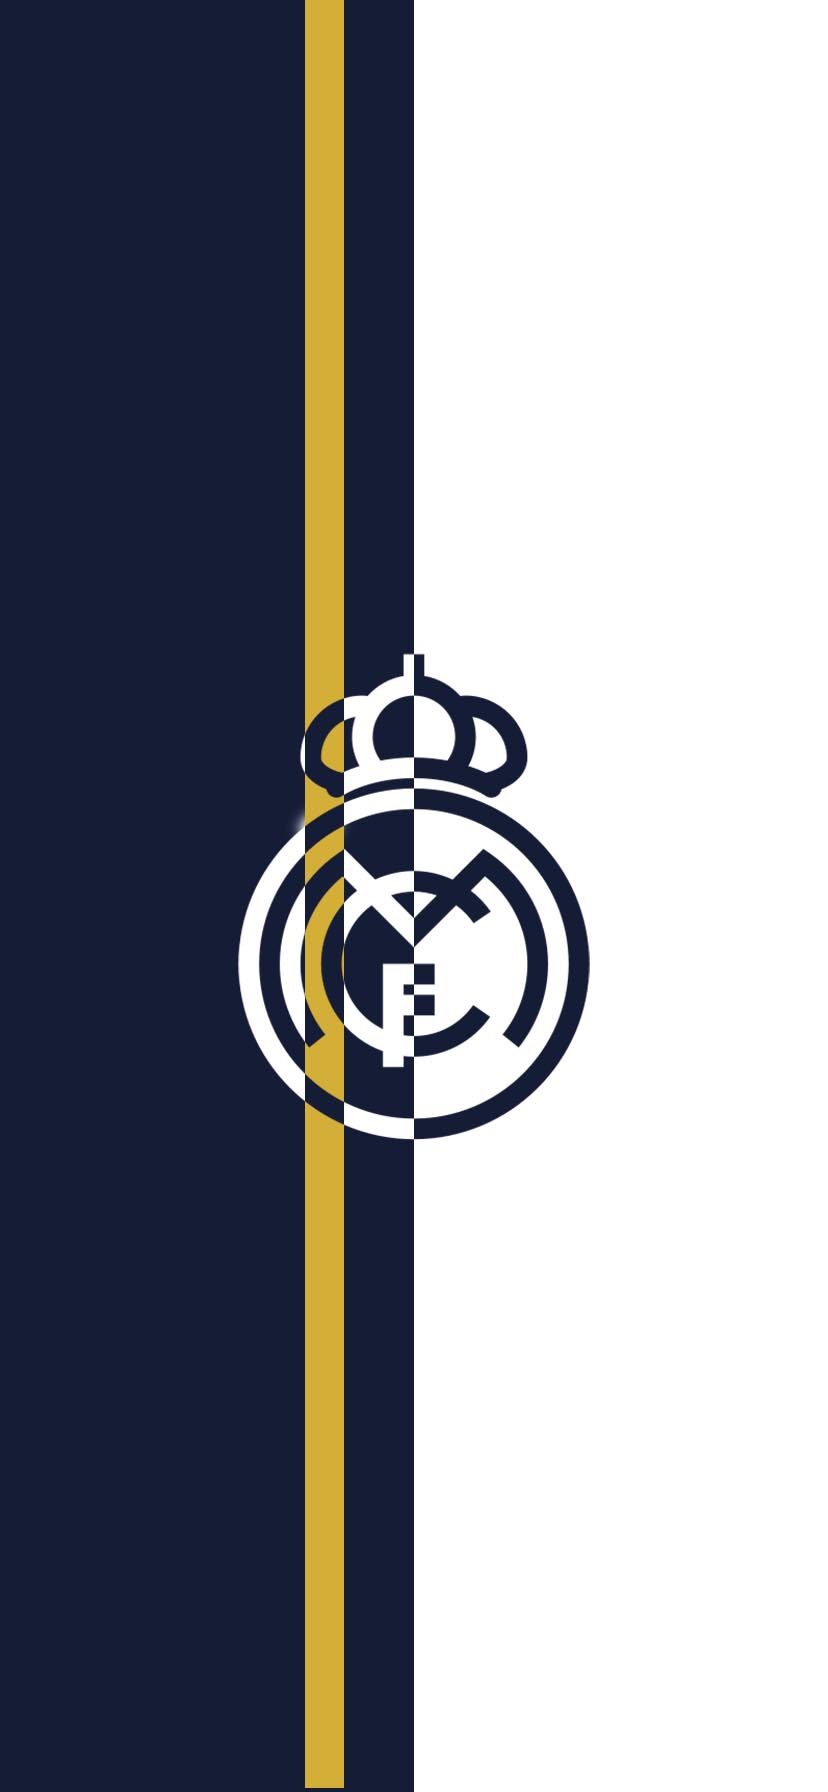 48+ Real Madrid Wallpaper 2021 Iphone Pics